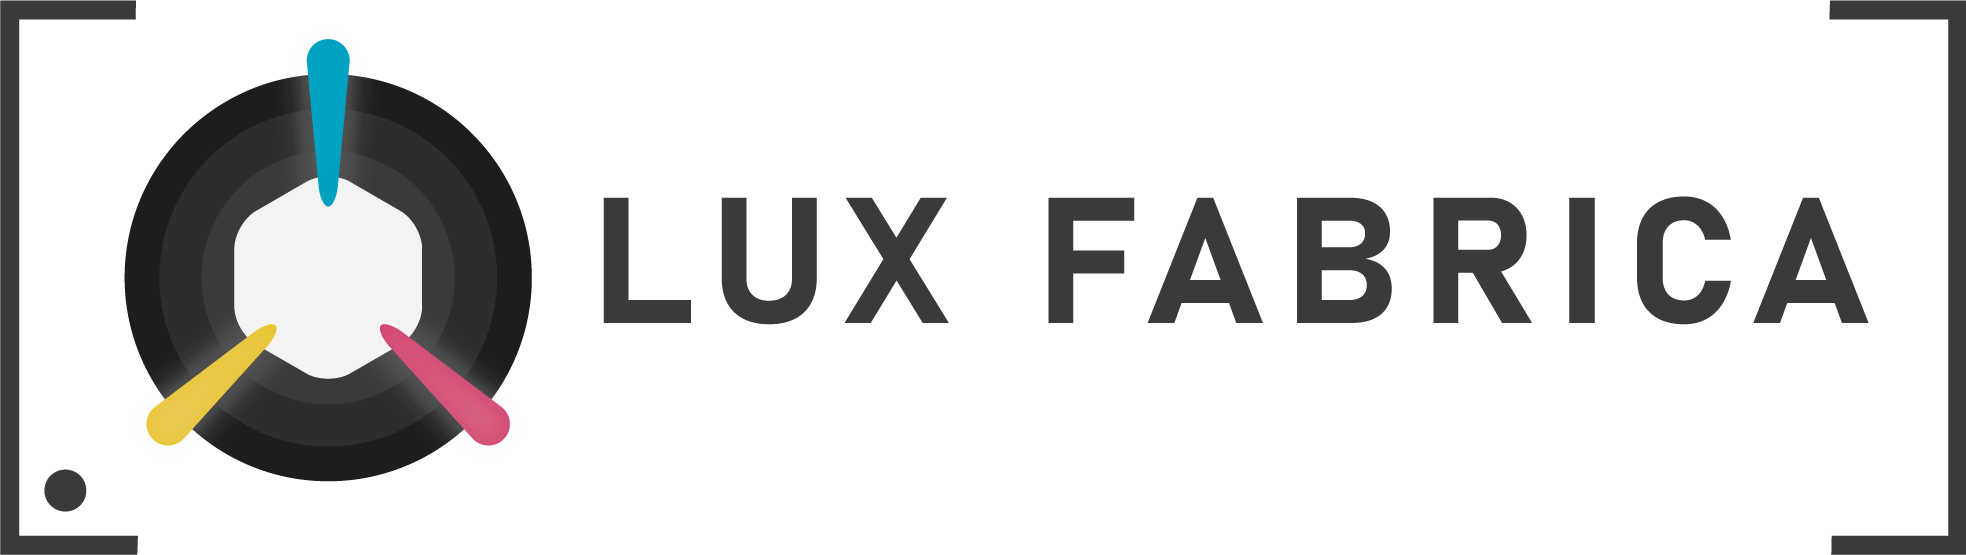 Lux Fabric logo